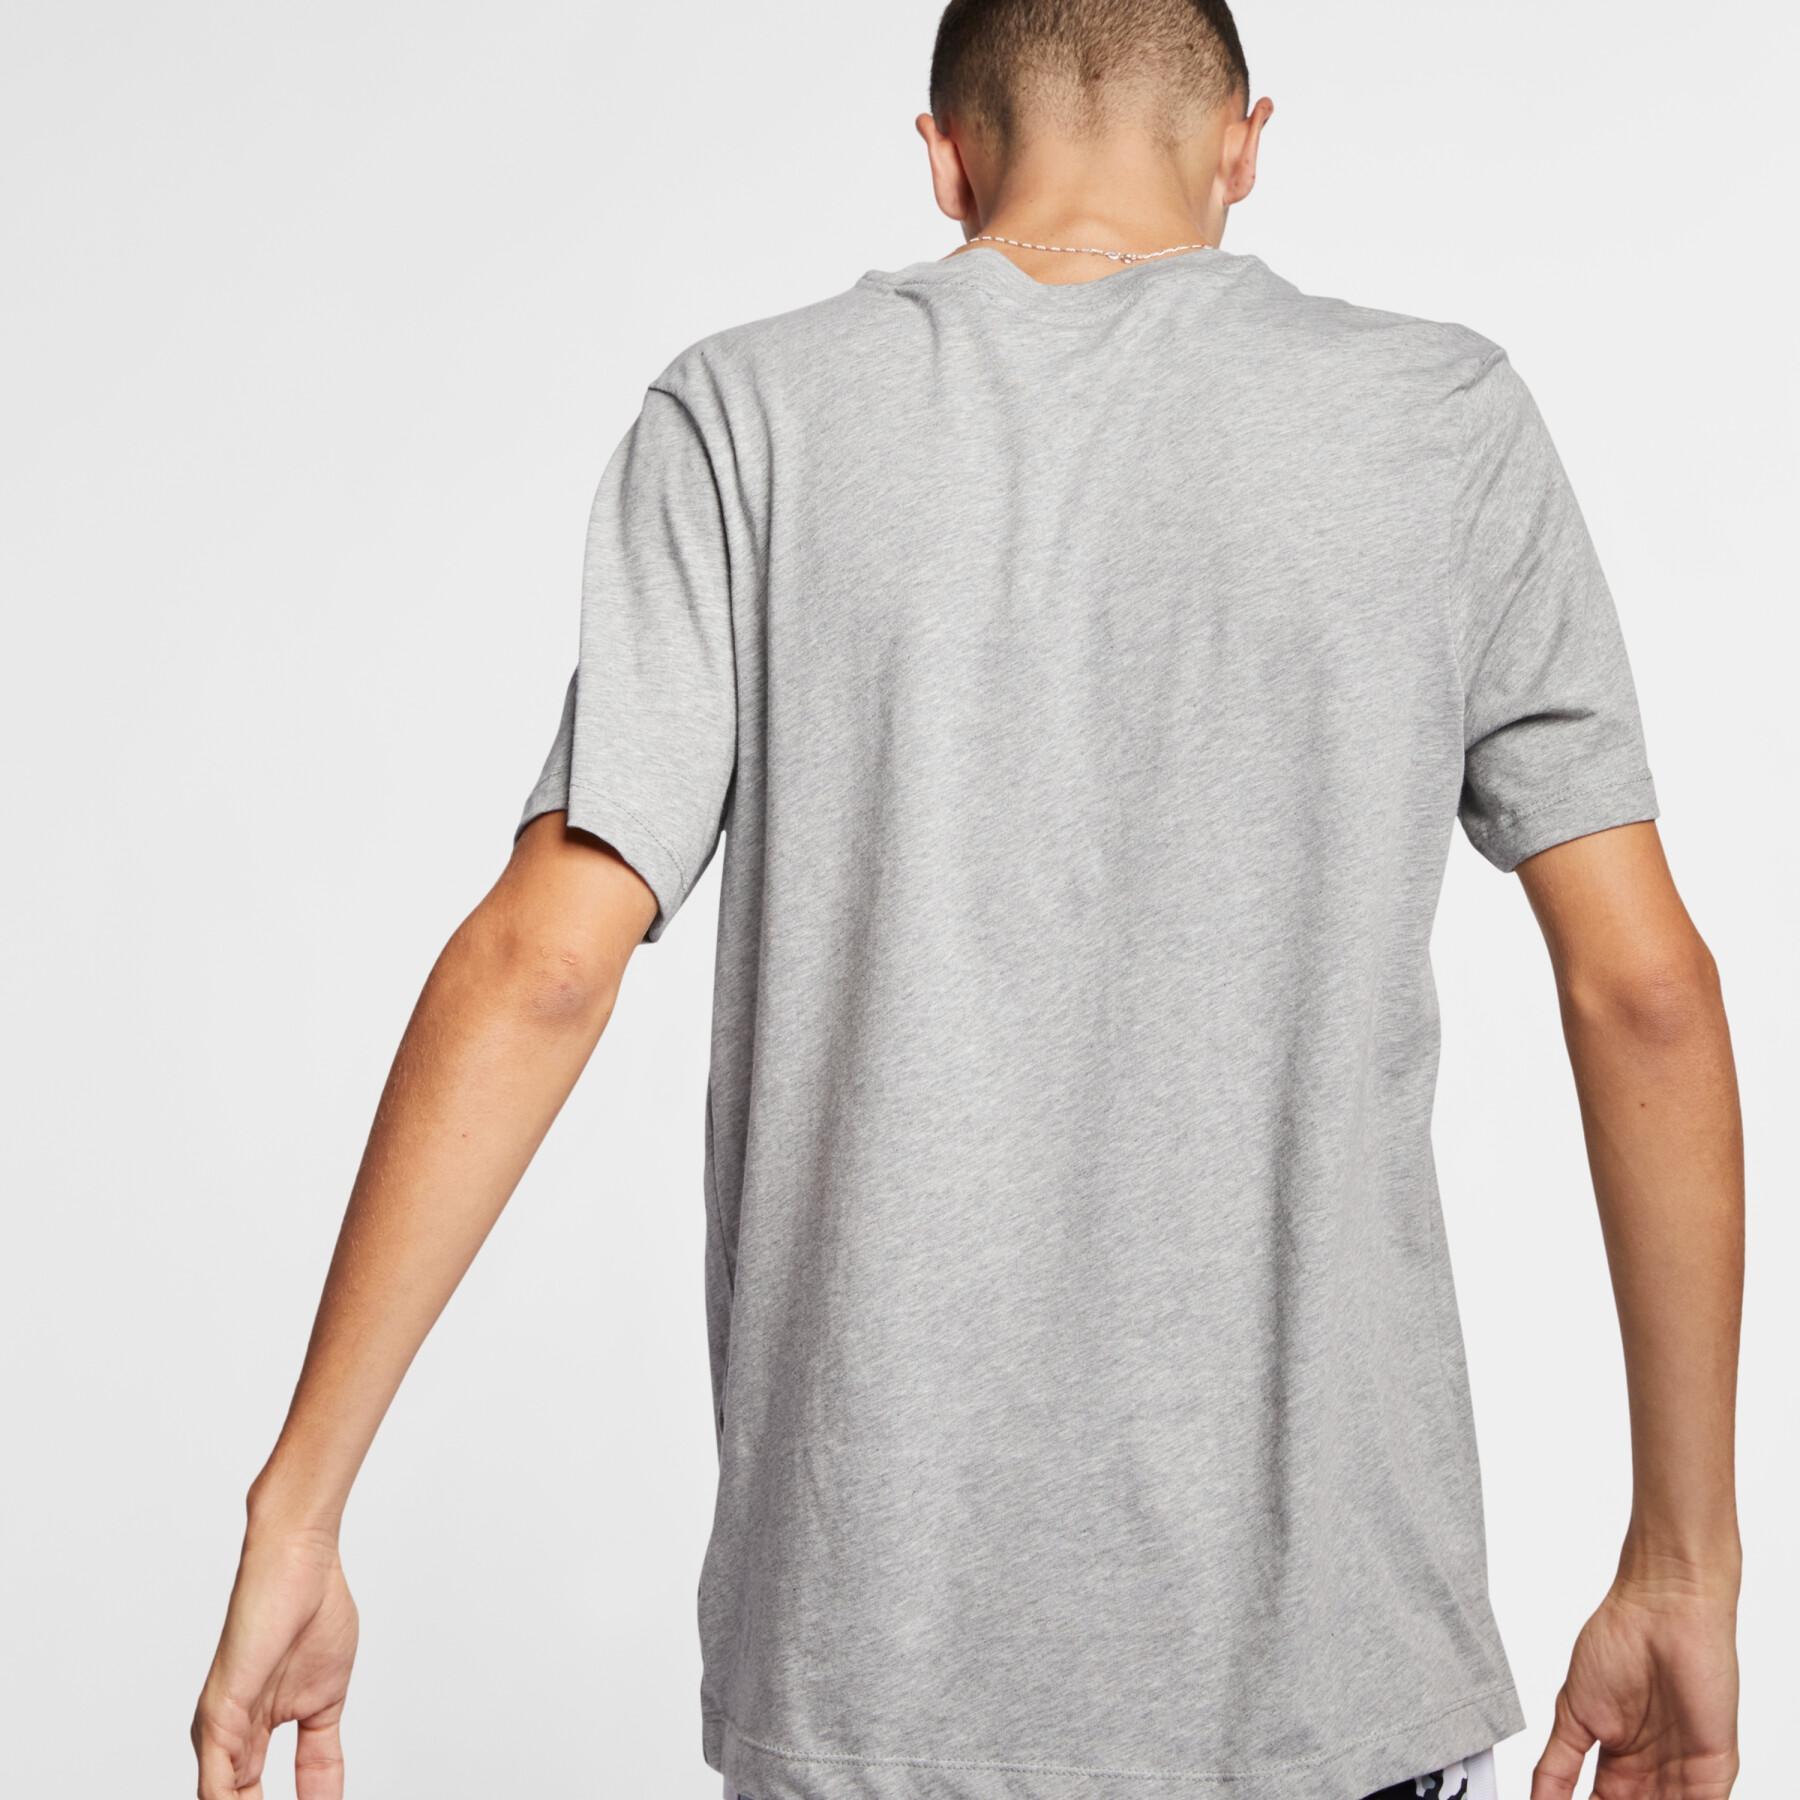 Camiseta Nike sportswear